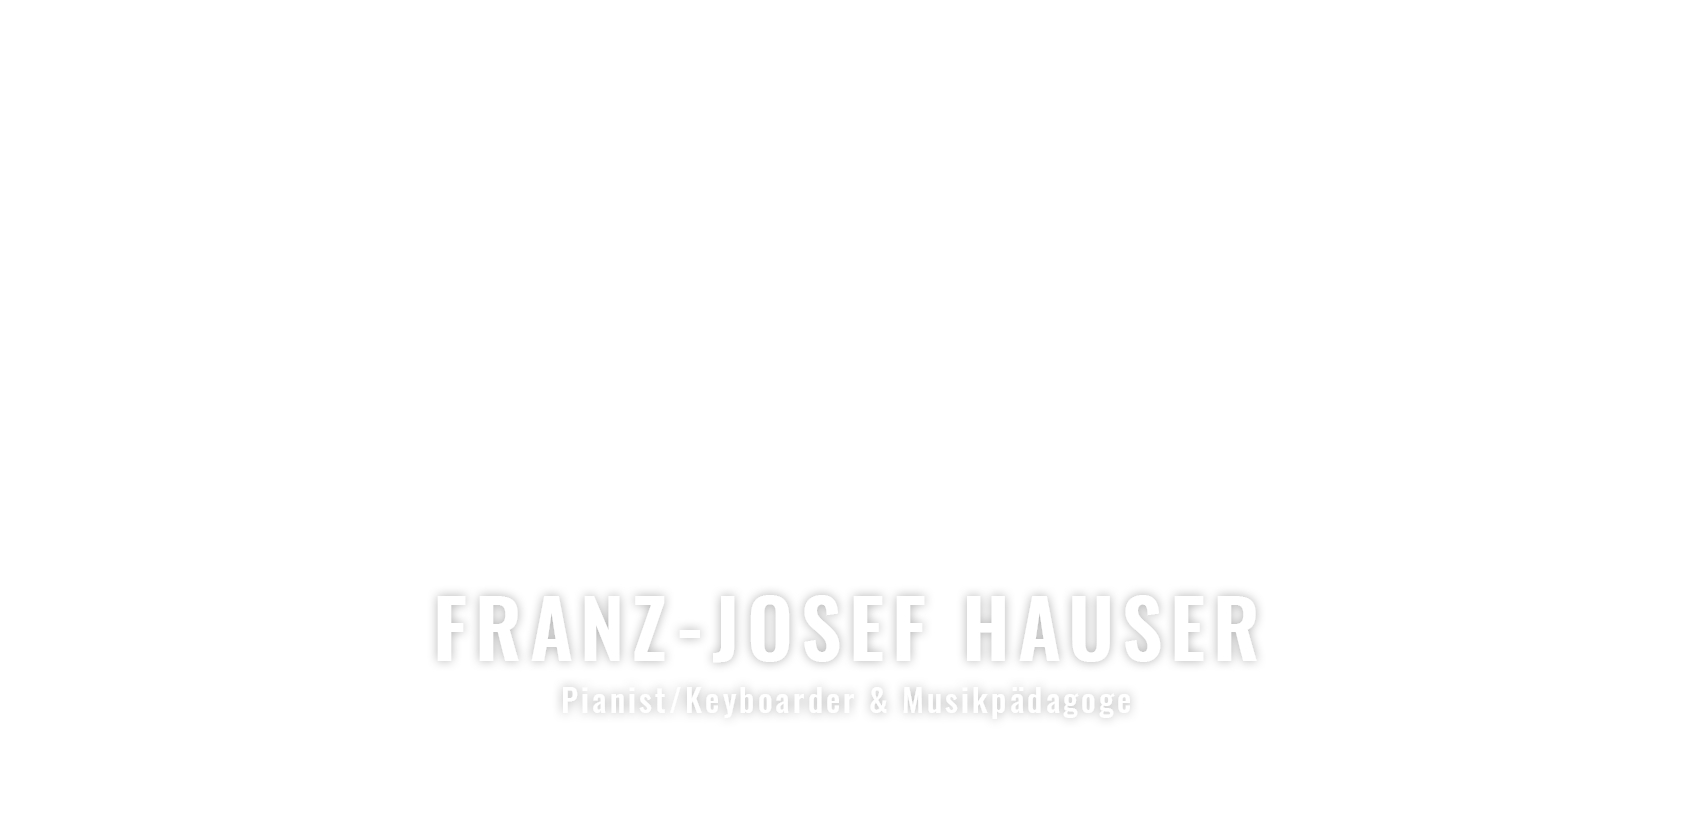 Franz-Josef Hauser